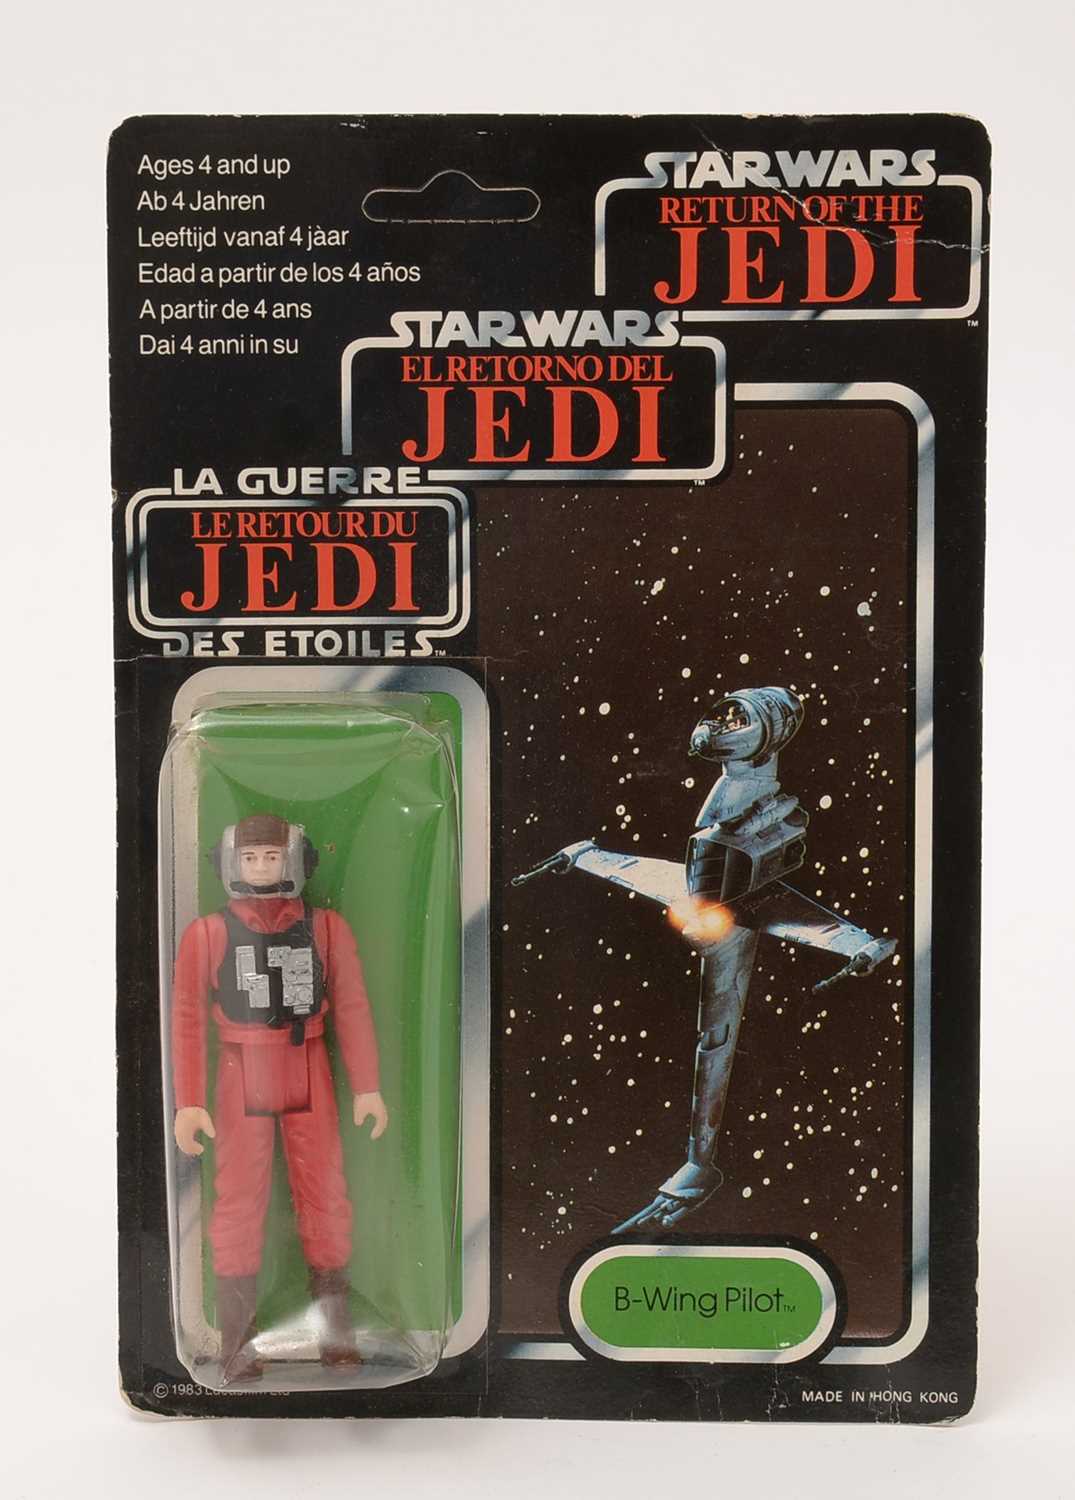 233 - Star Wars Return of the Jedi B-Wing Pilot carded figure,